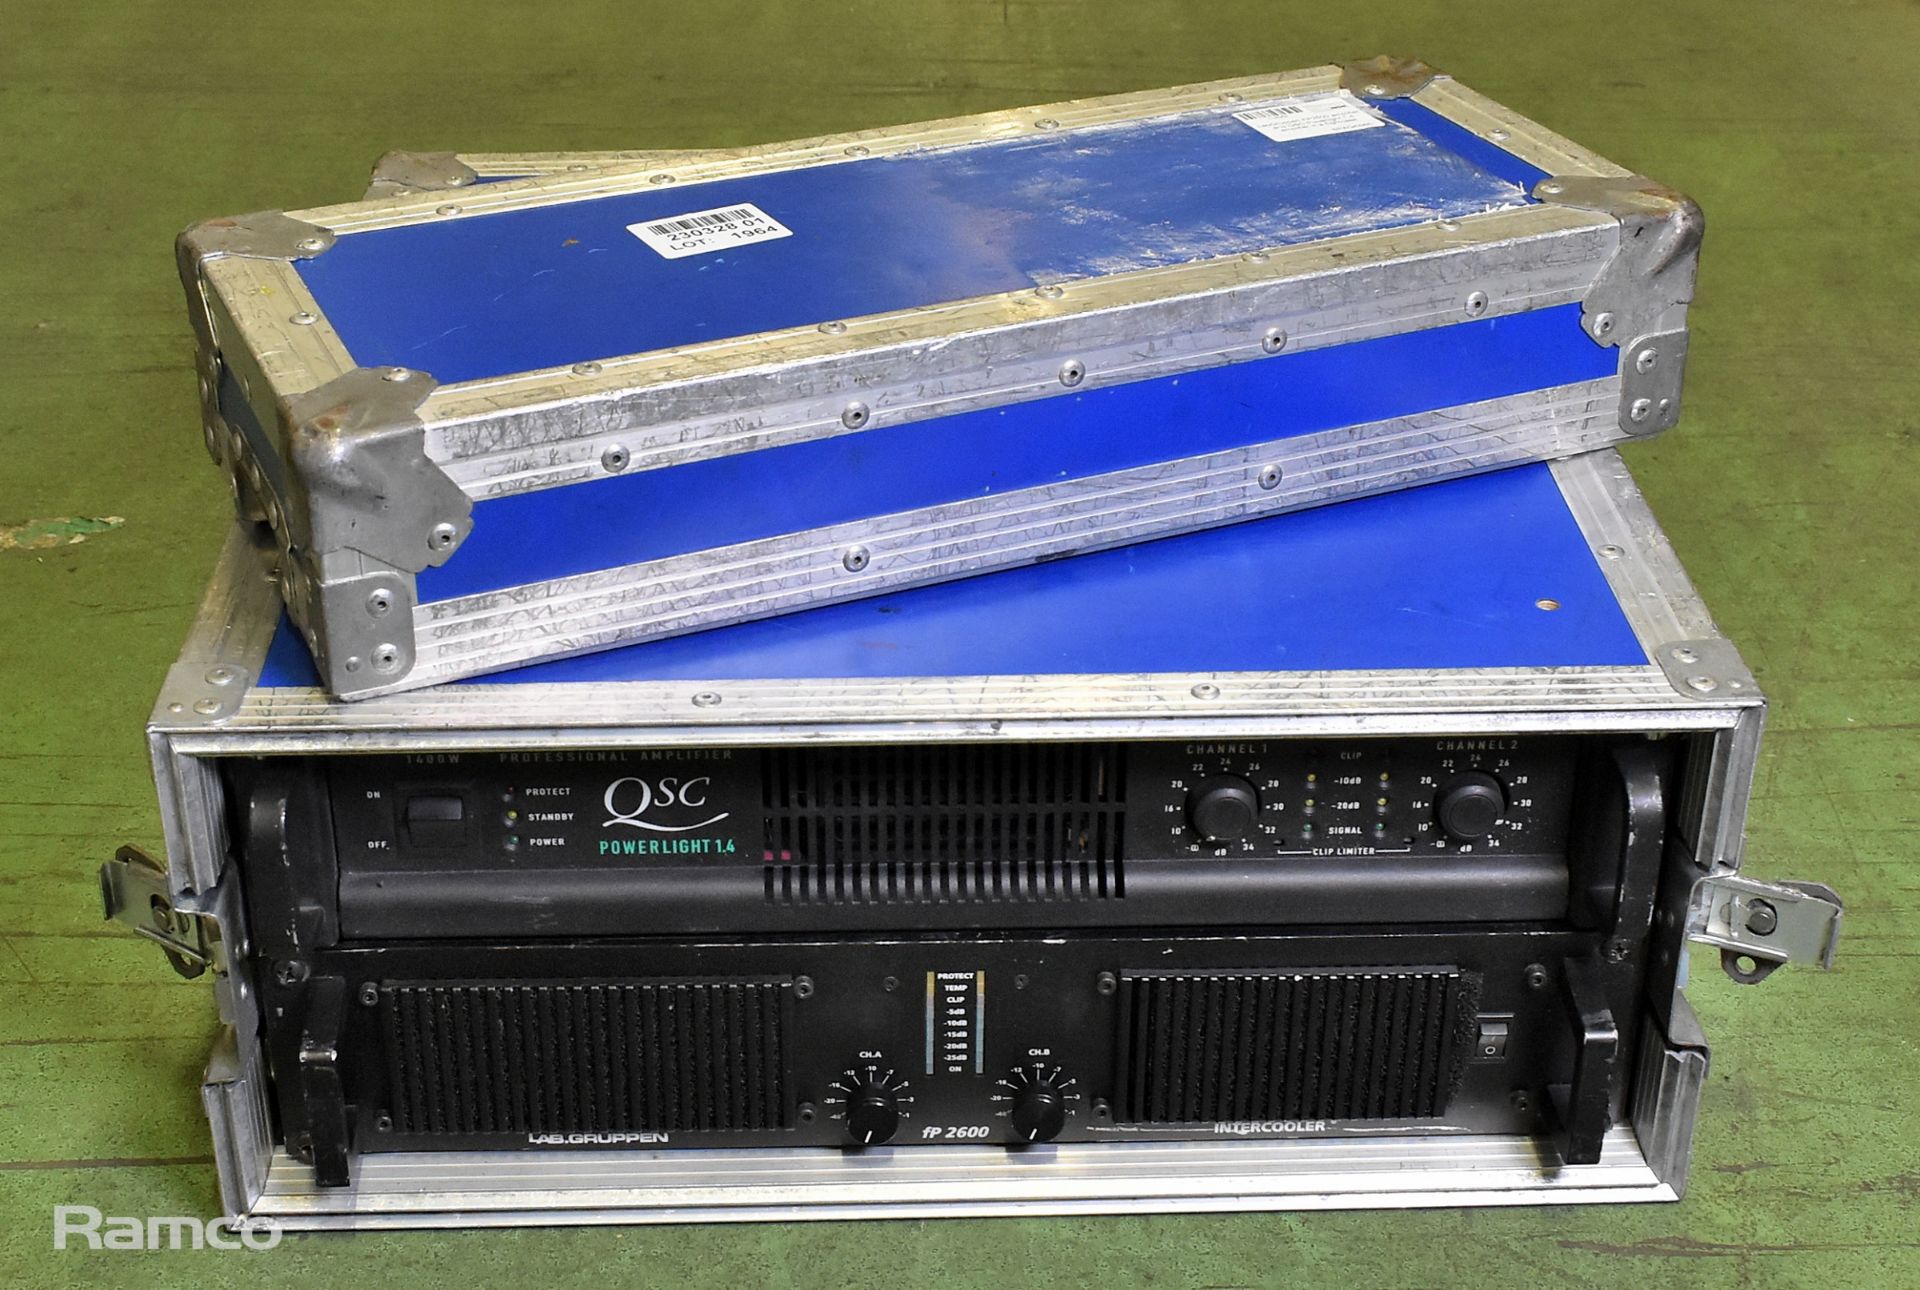 Lab Gruppen FP2600 amplifier and QSC Powerlight 1.4 amplifier in a flightcase